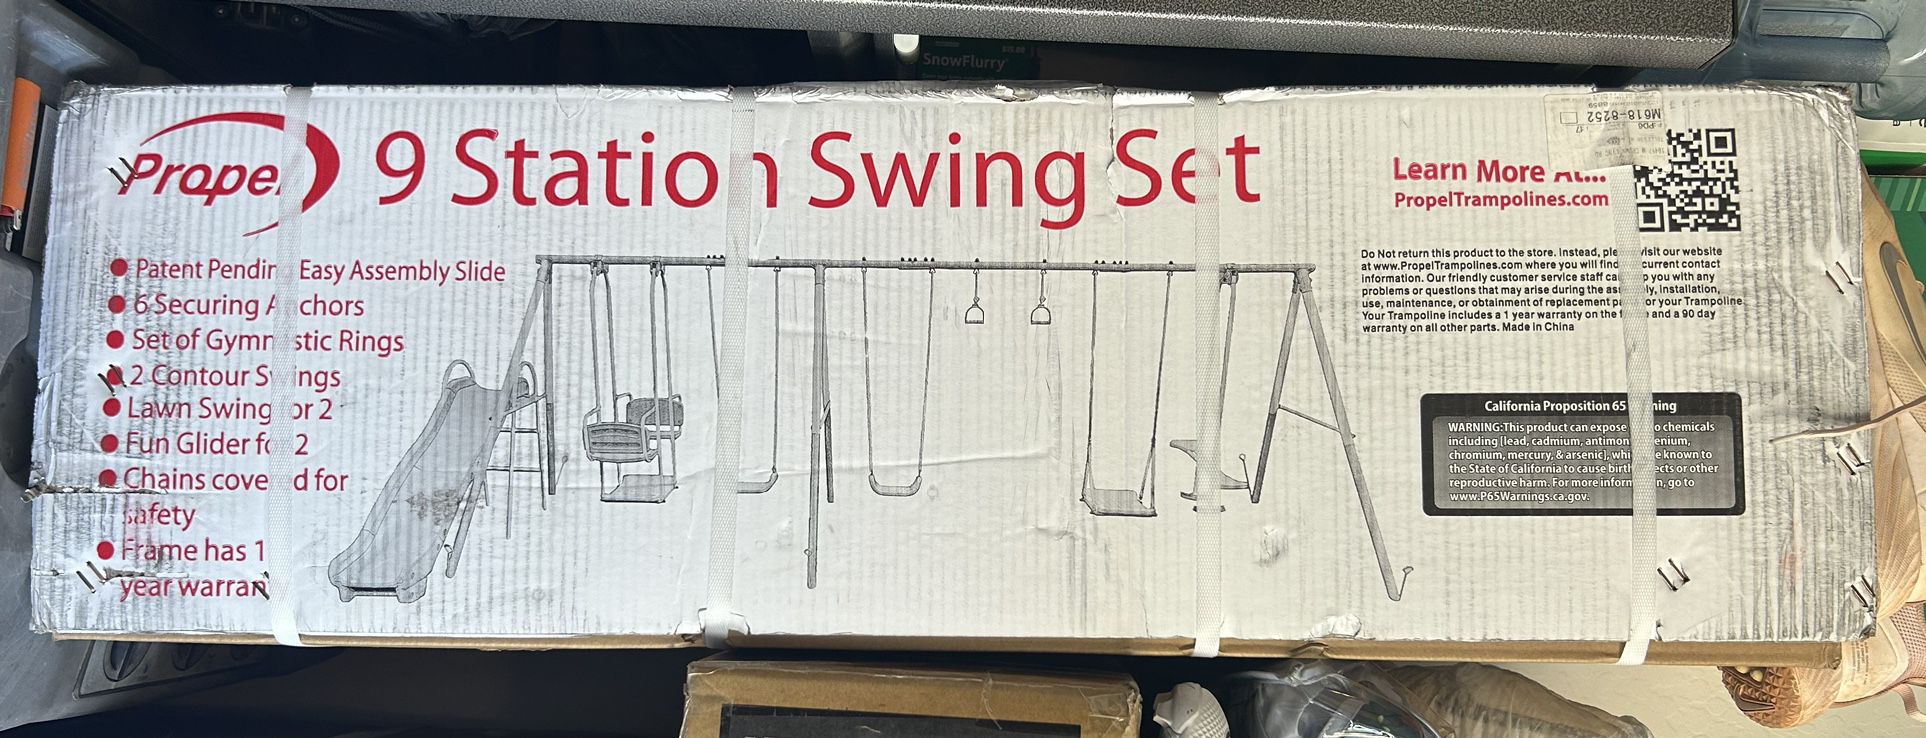 9 station Swing Set